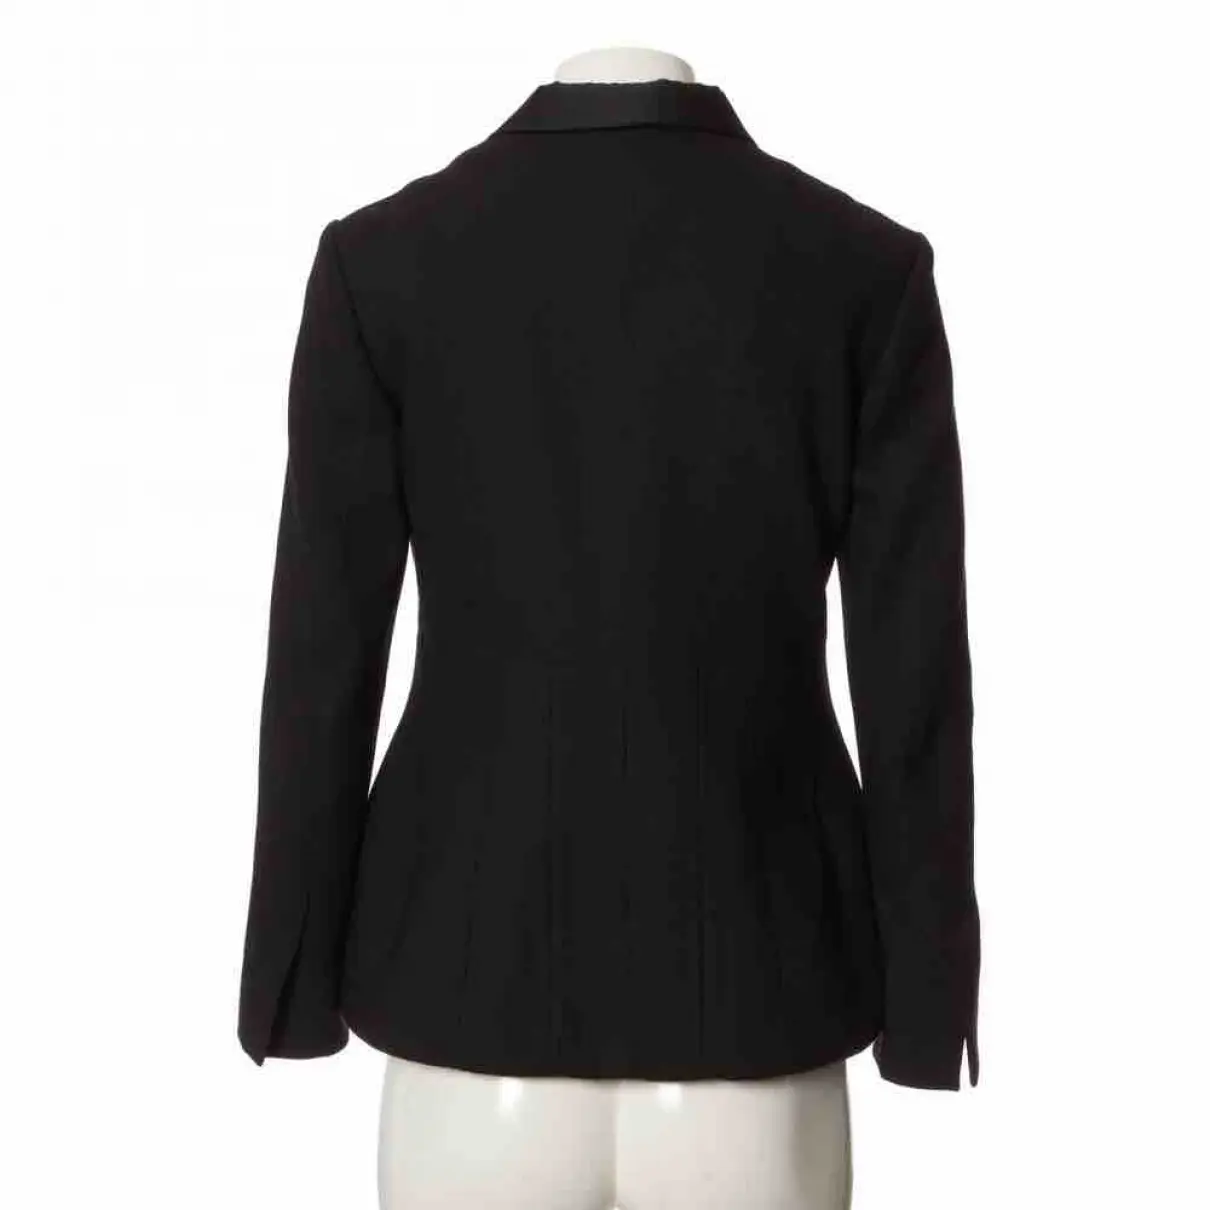 Buy Celine Jacket online